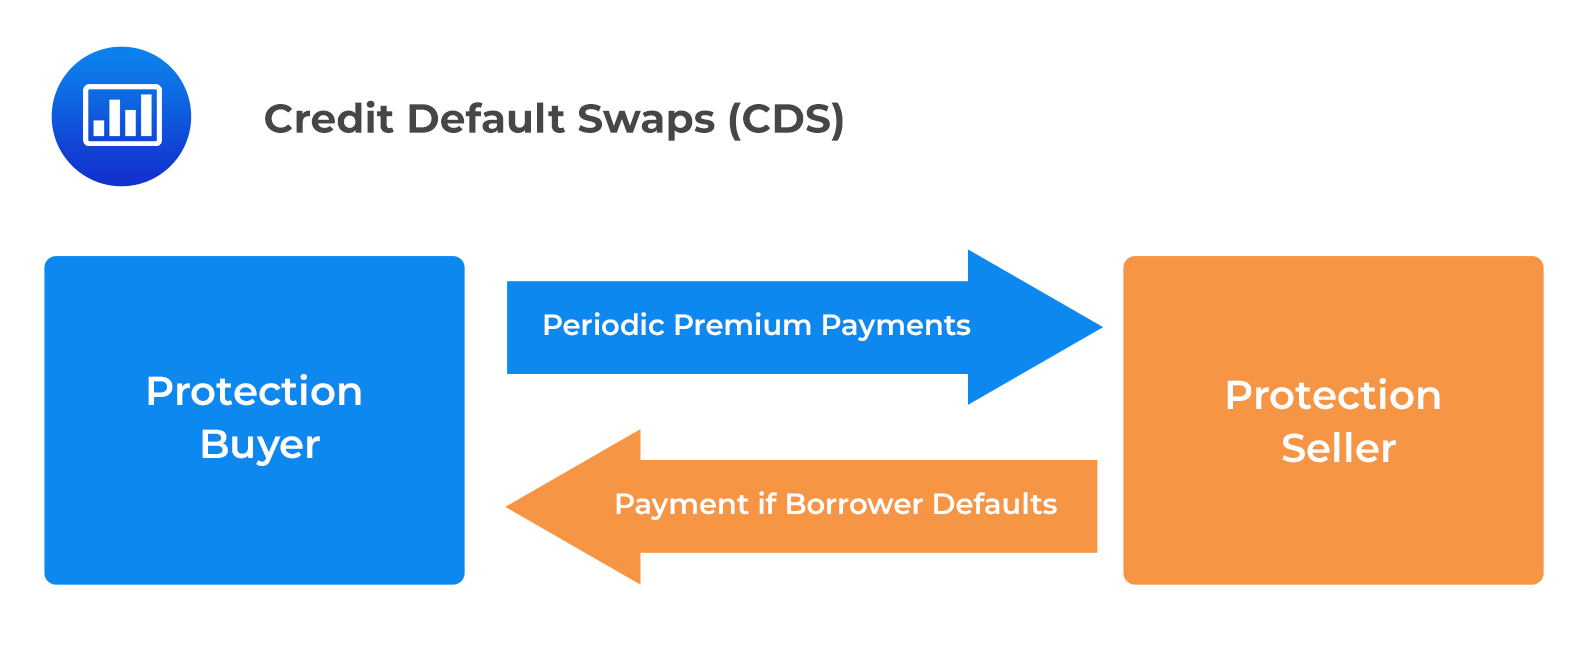 Credit Default Swaps (CDS)